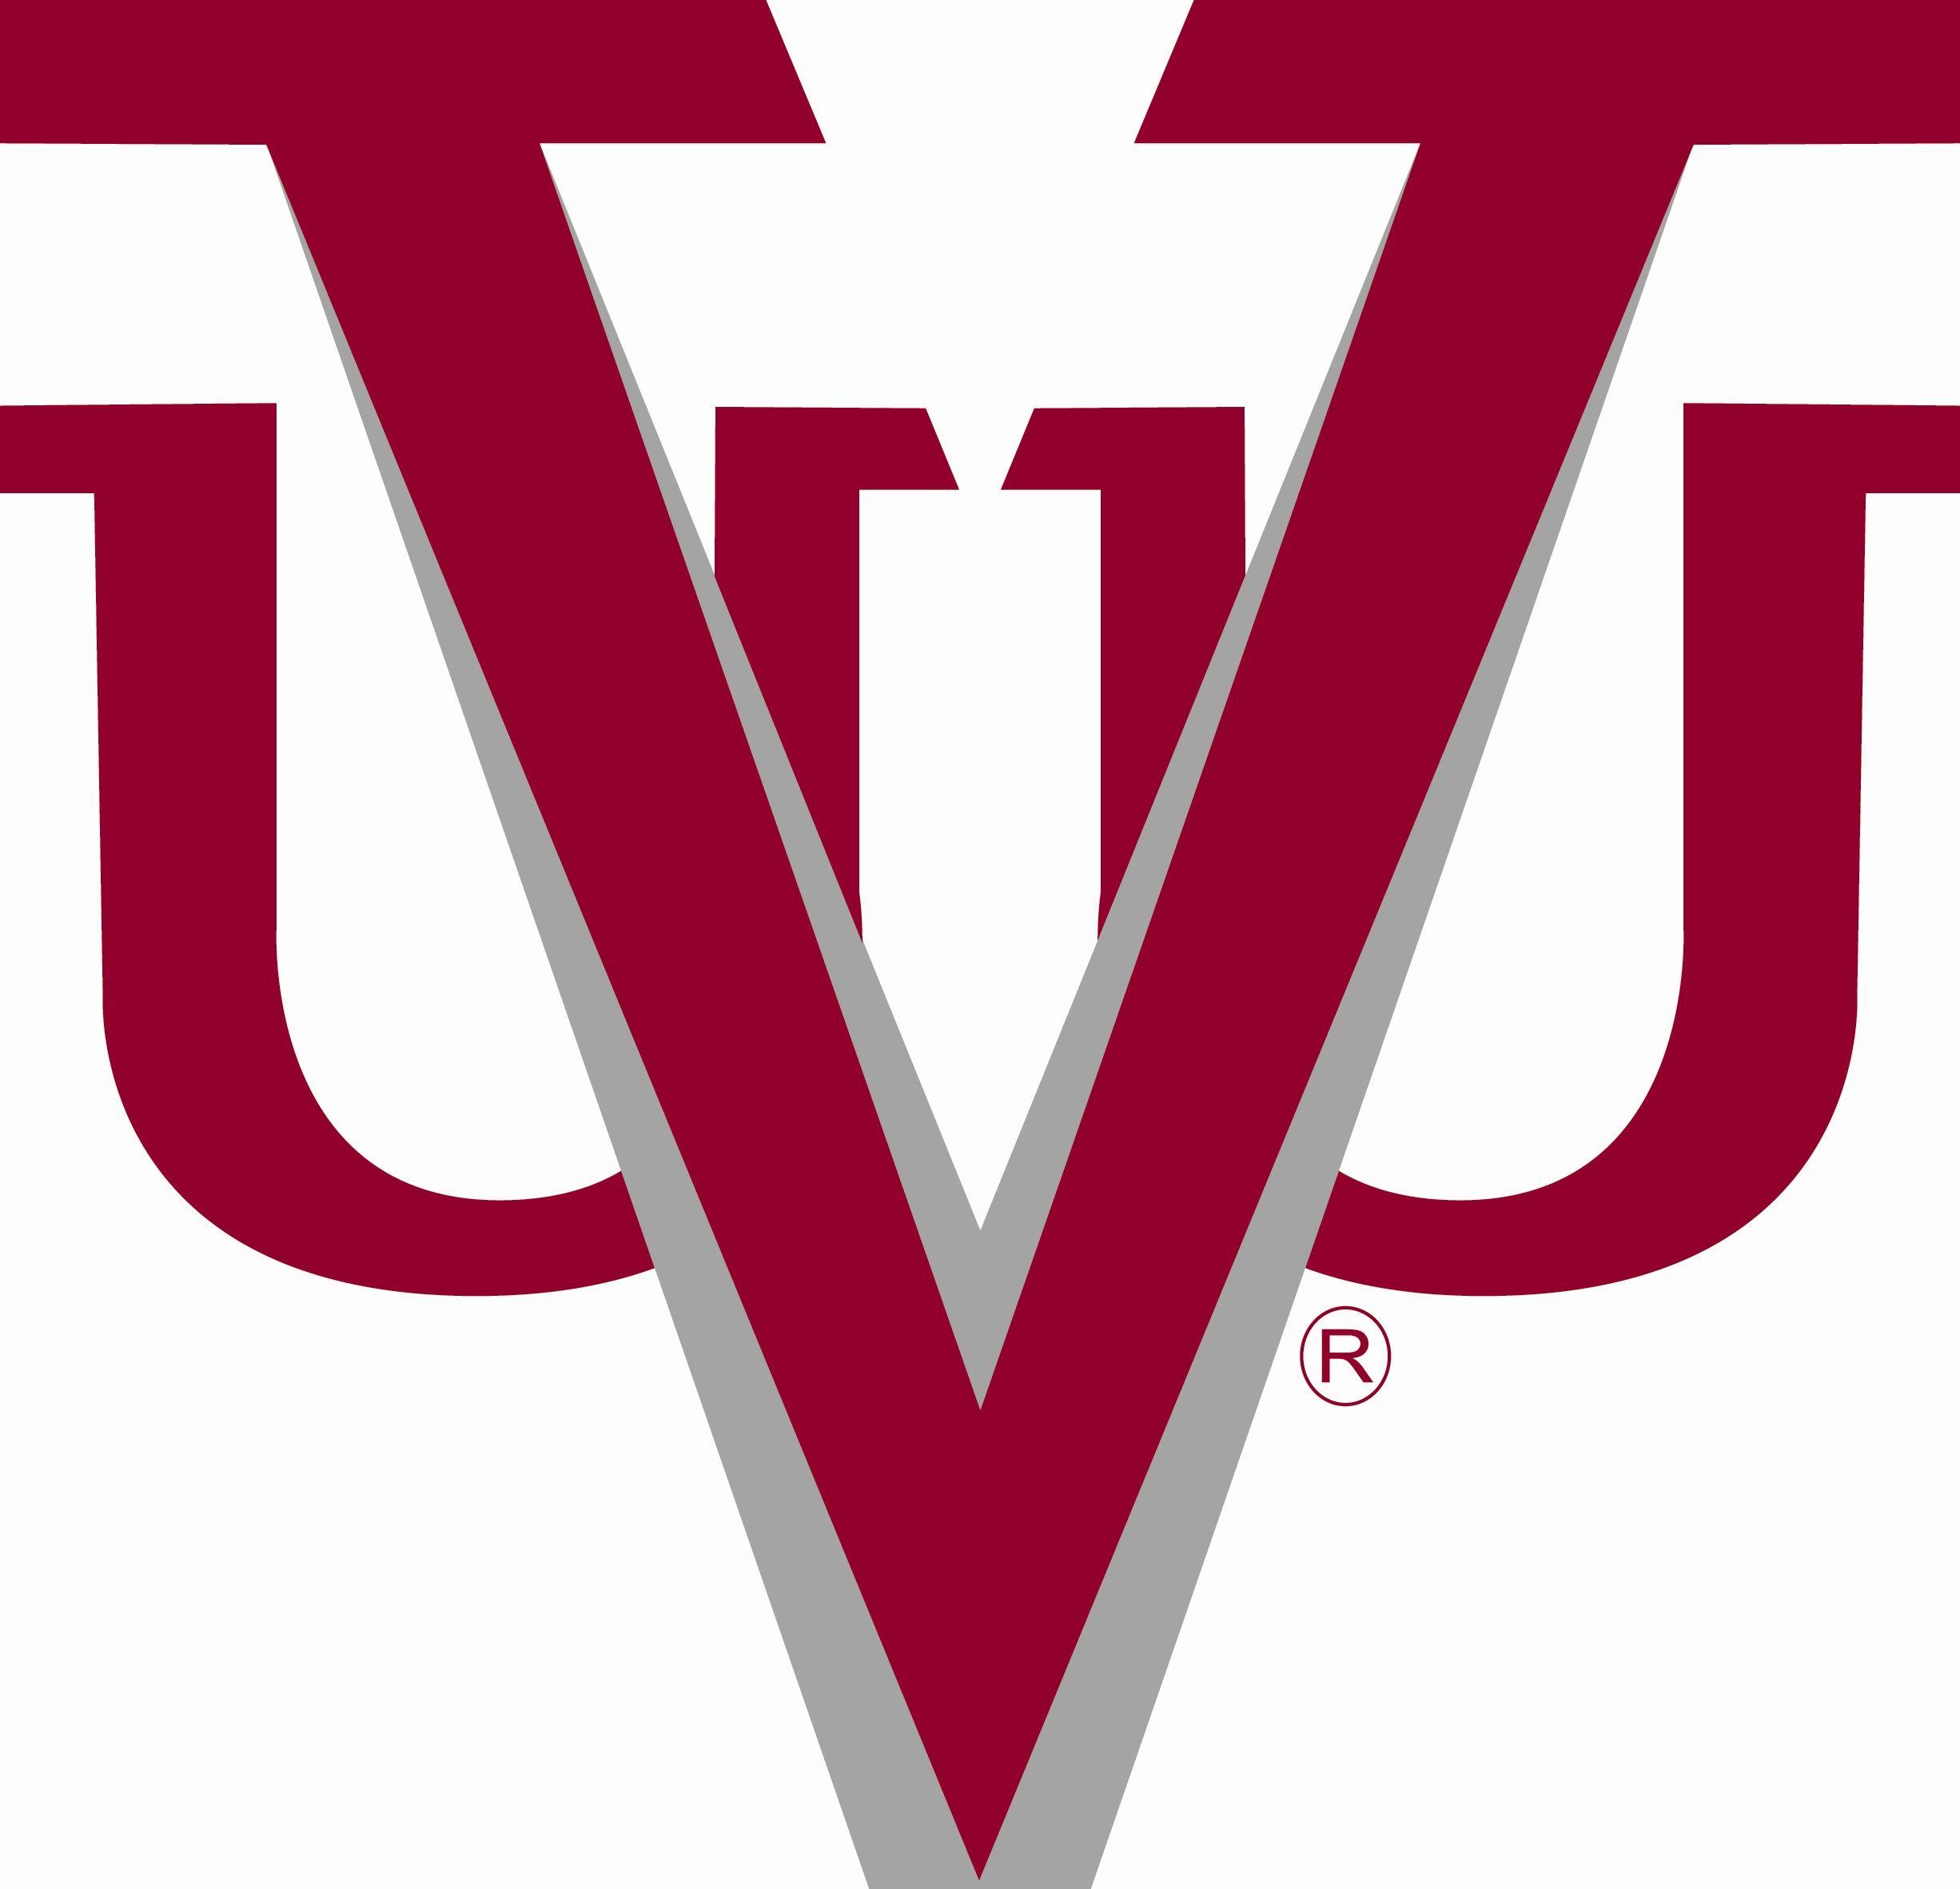 Vuu Logo - Virginia Union University - my alma mater | Things for My Wall ...